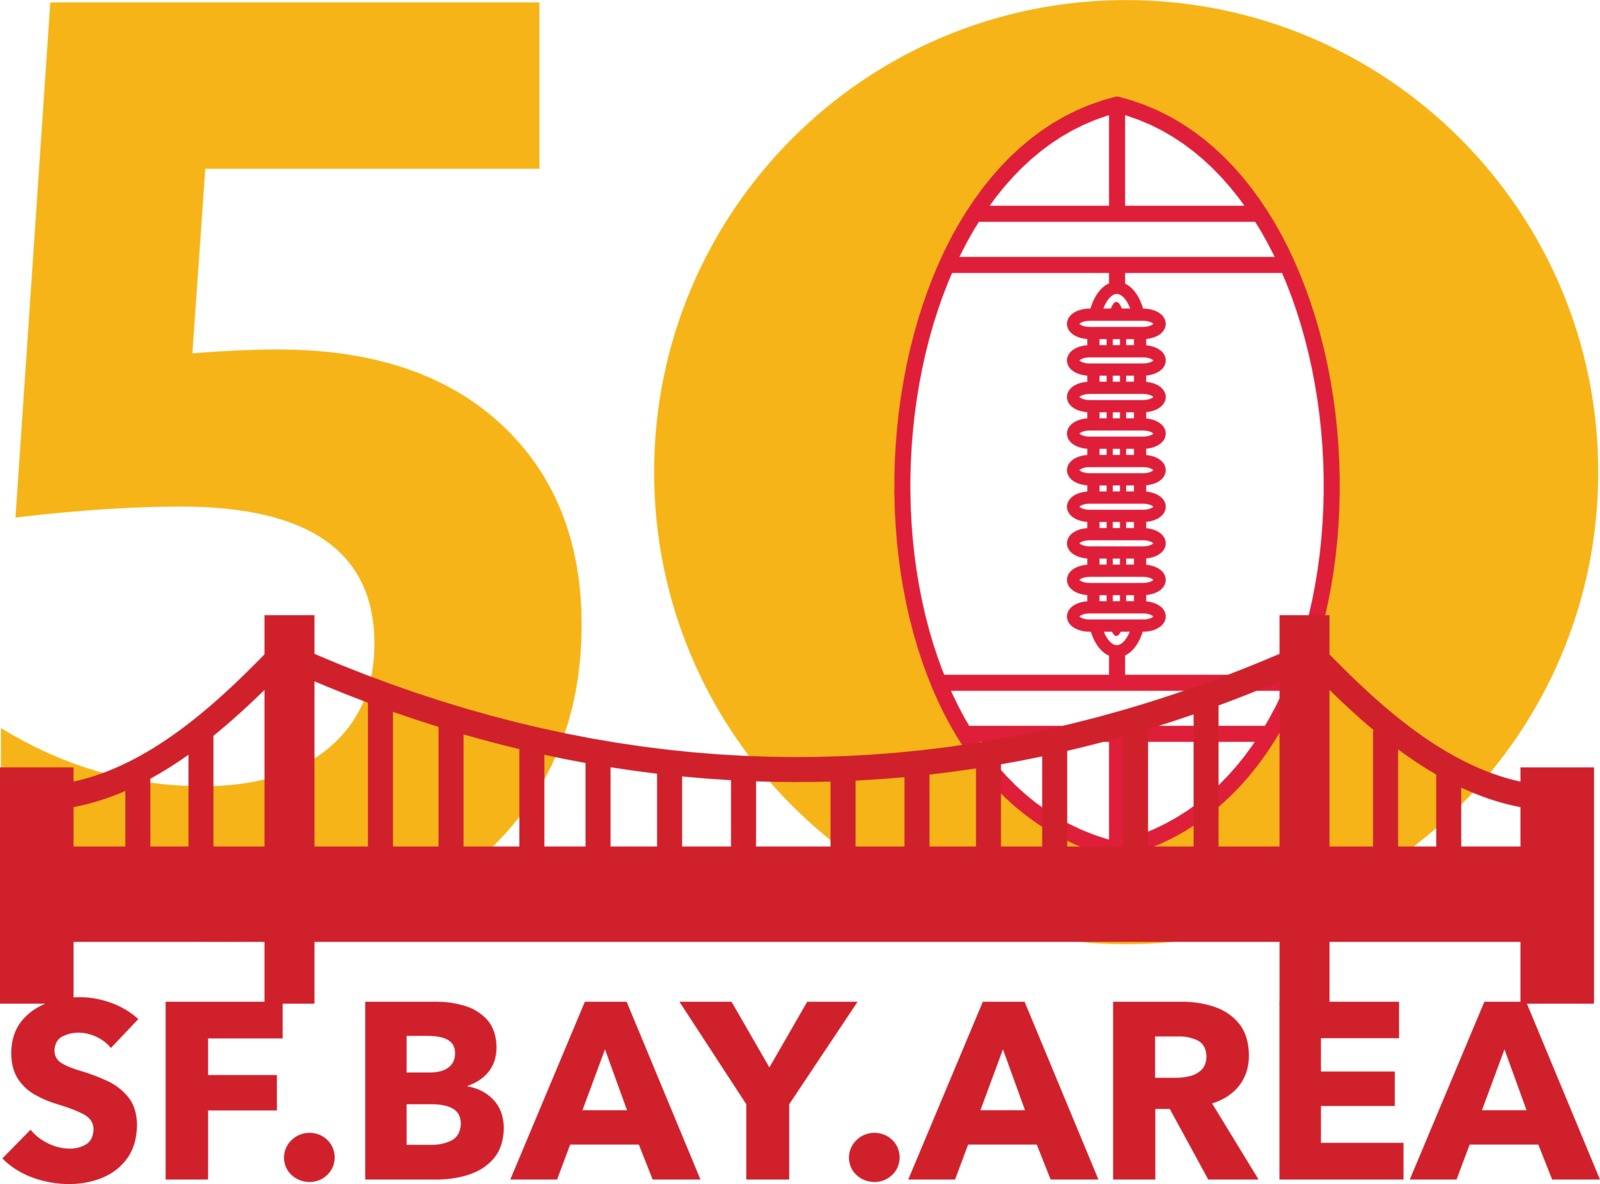 Pro Football Championship 50 SF Bay Area by patrimonio